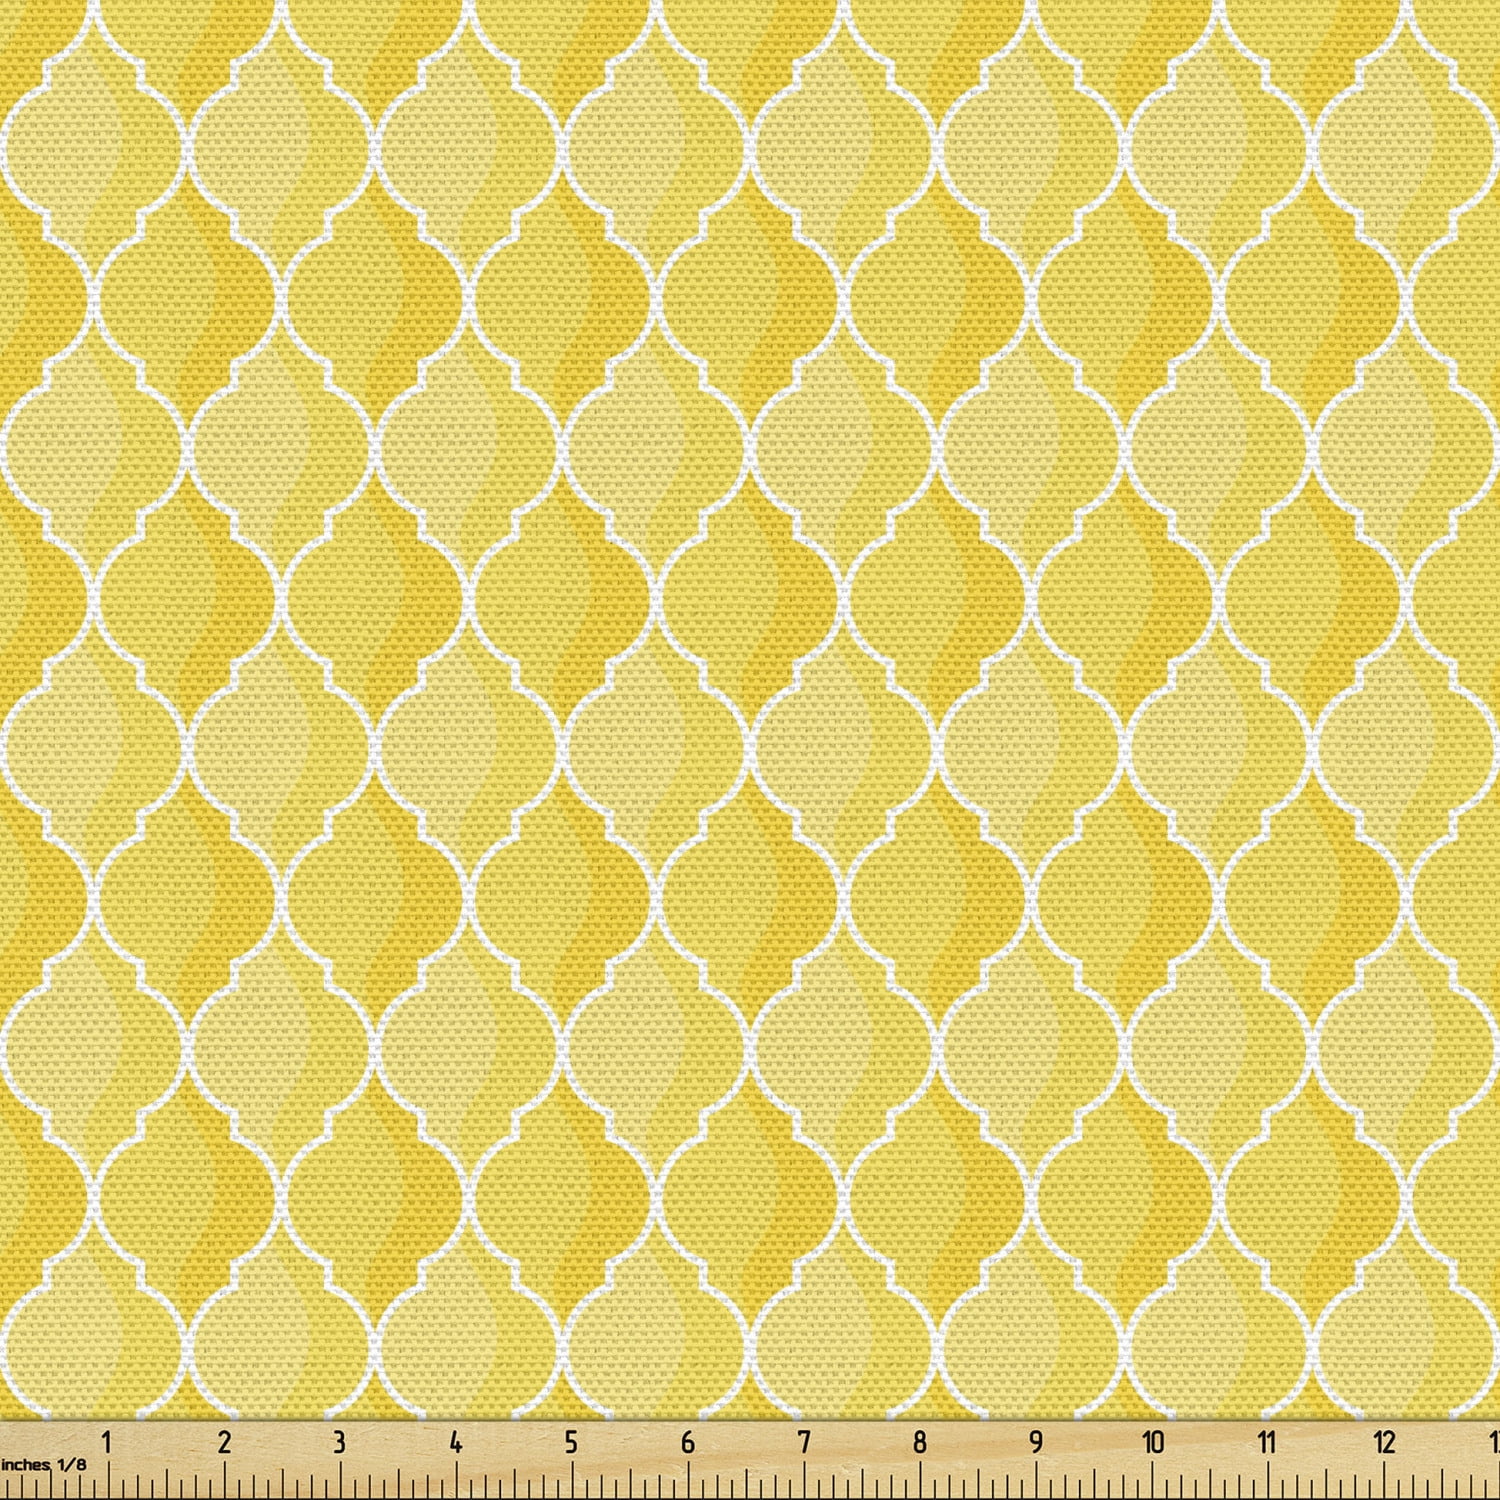 Details about   Burnt Orange Mustard Retro Geometric Handmade Printed Fabric Lampshade 591 